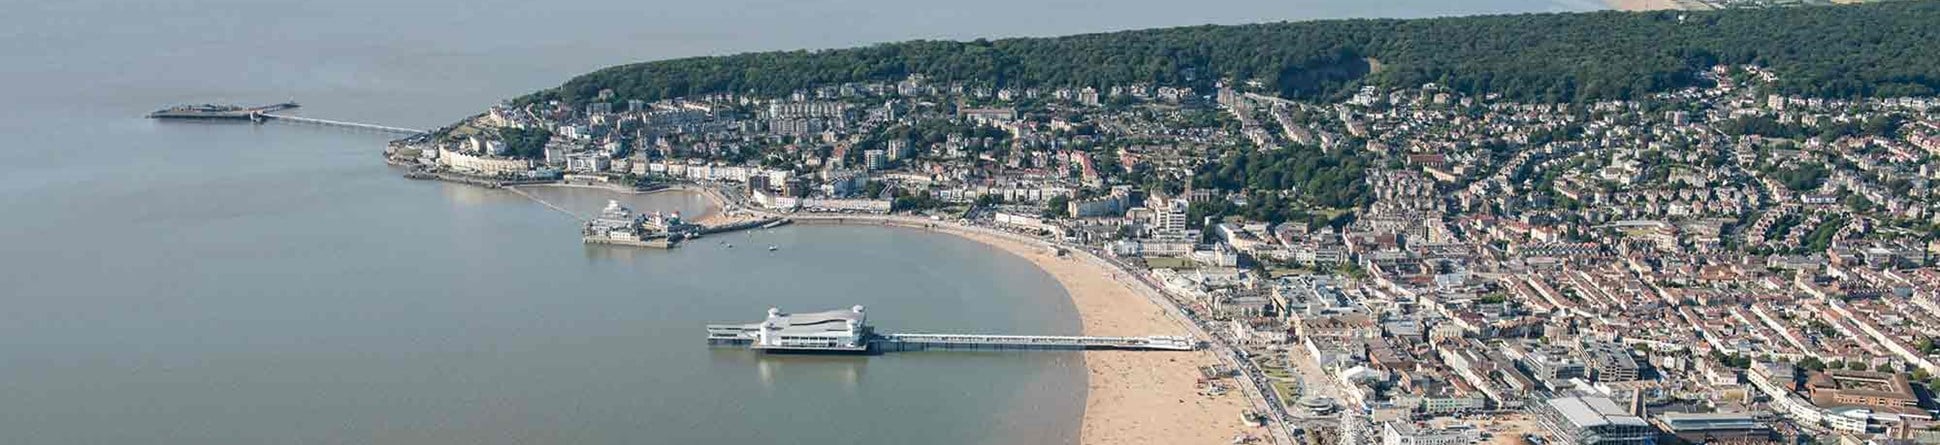 Aerial view of the coastline at Weston-super-Mare